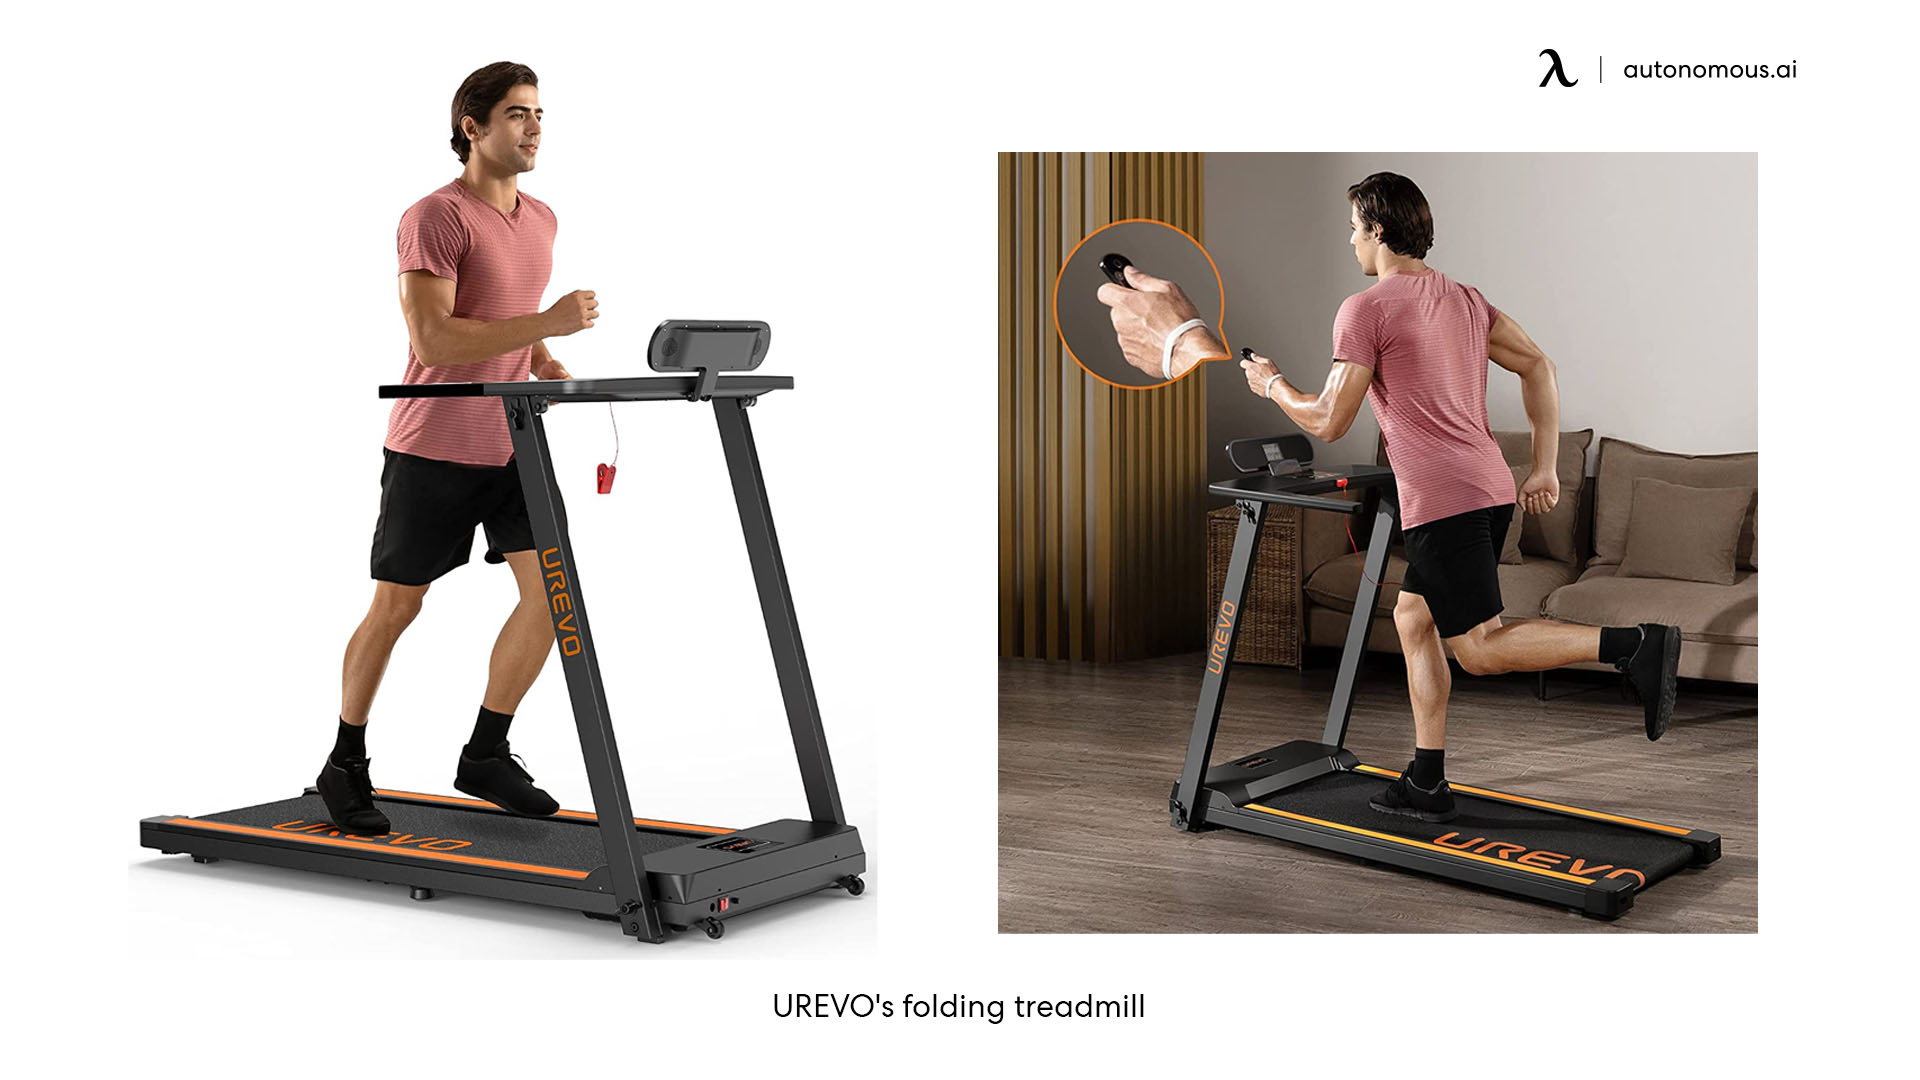 UREVO's folding treadmill